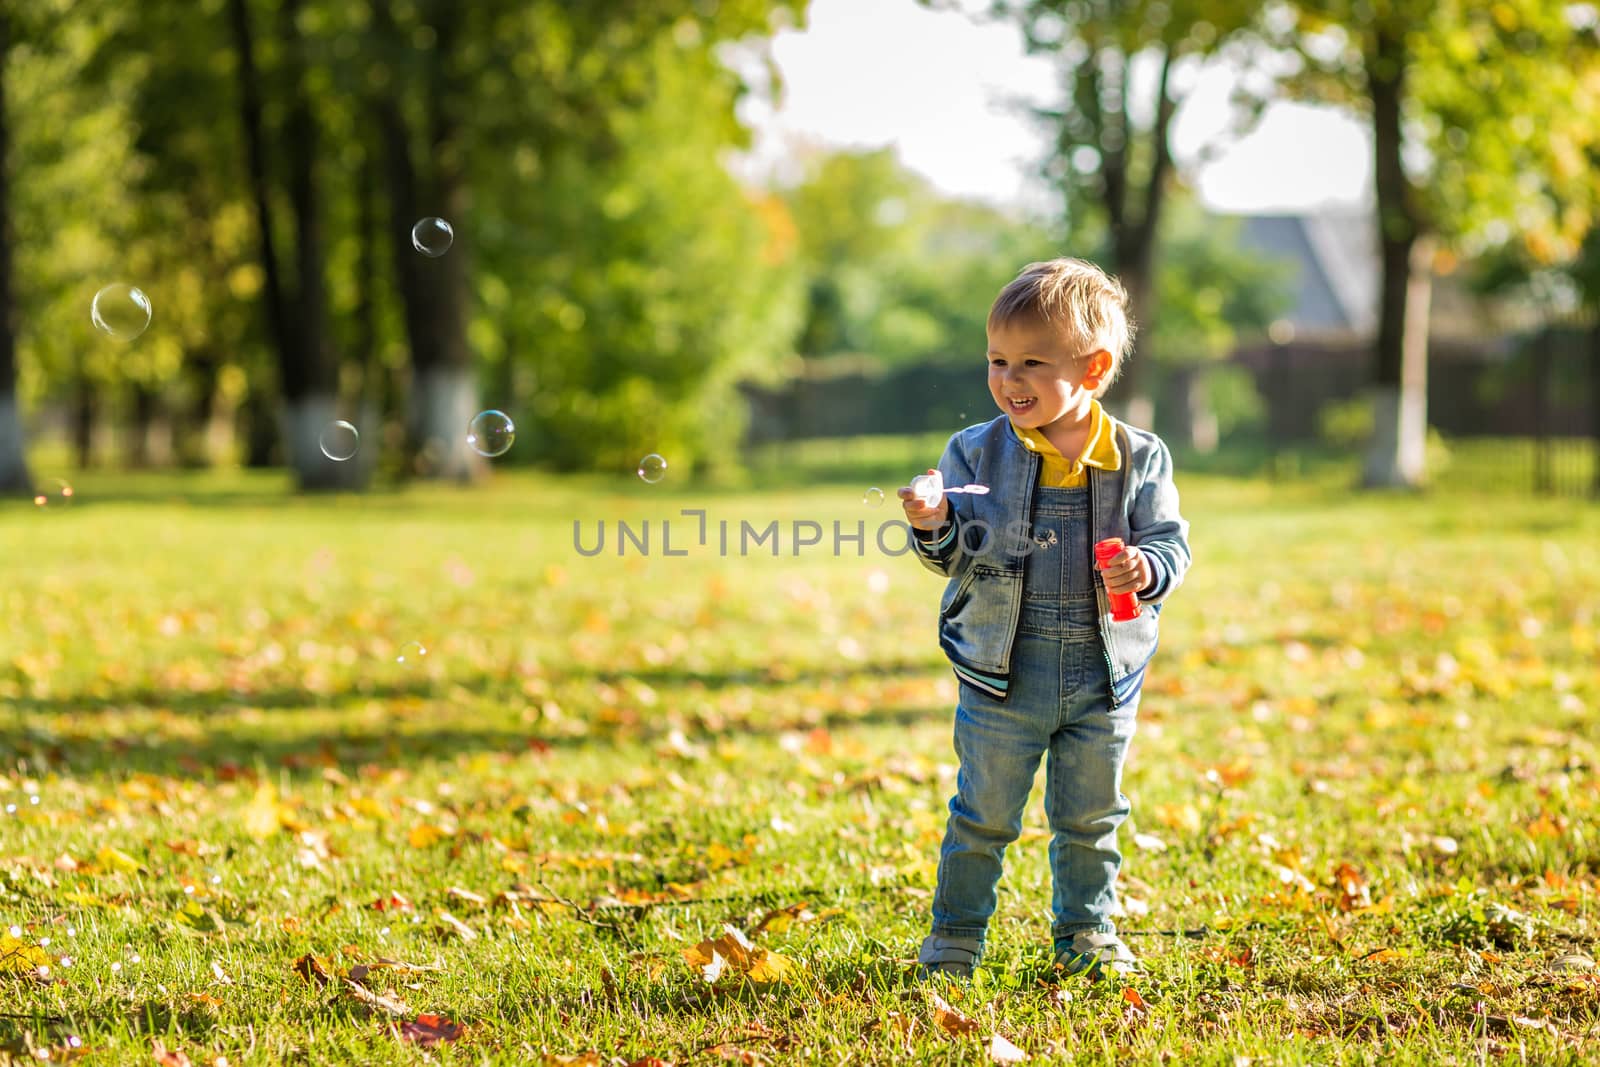 A little boy in denim clothes blows bubbles in the autumn park.